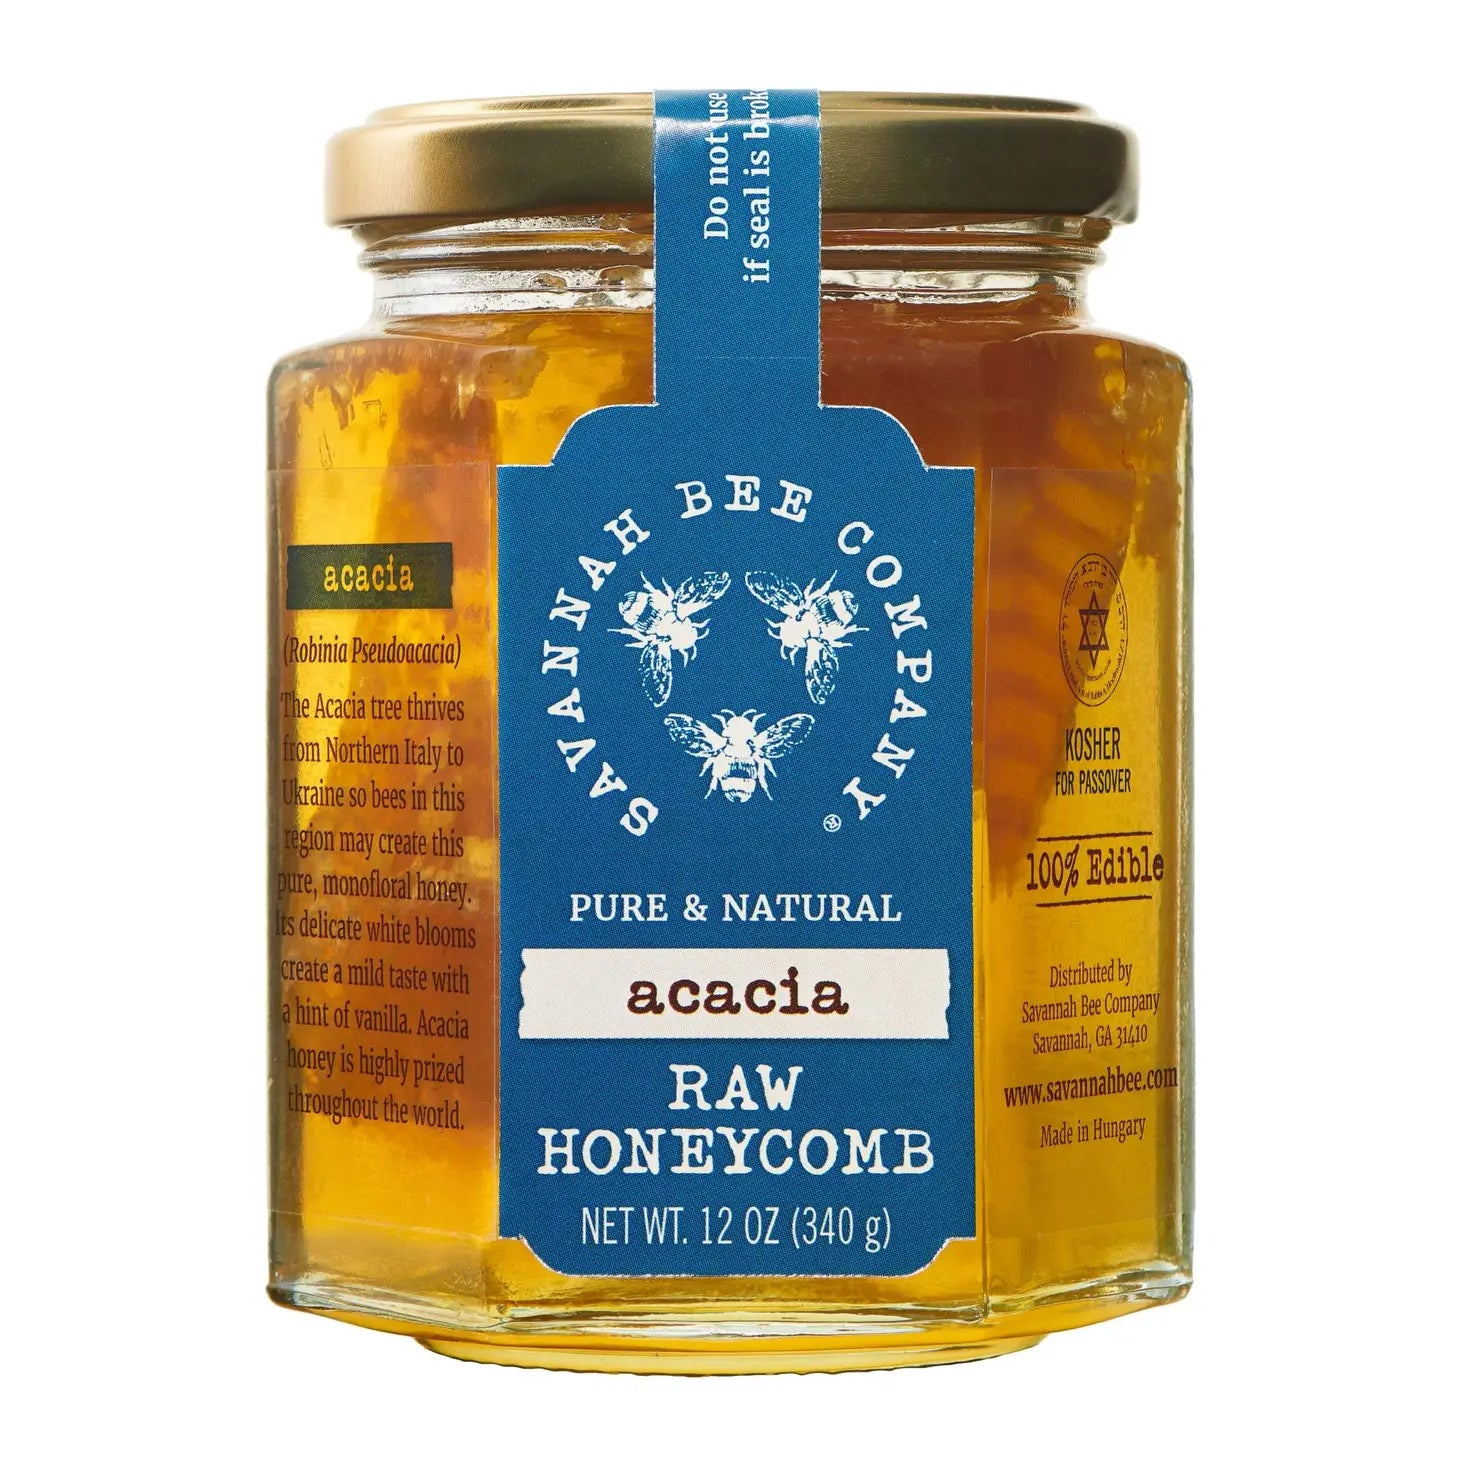 Acacia Honey Comb Jar Savannah Bee Co